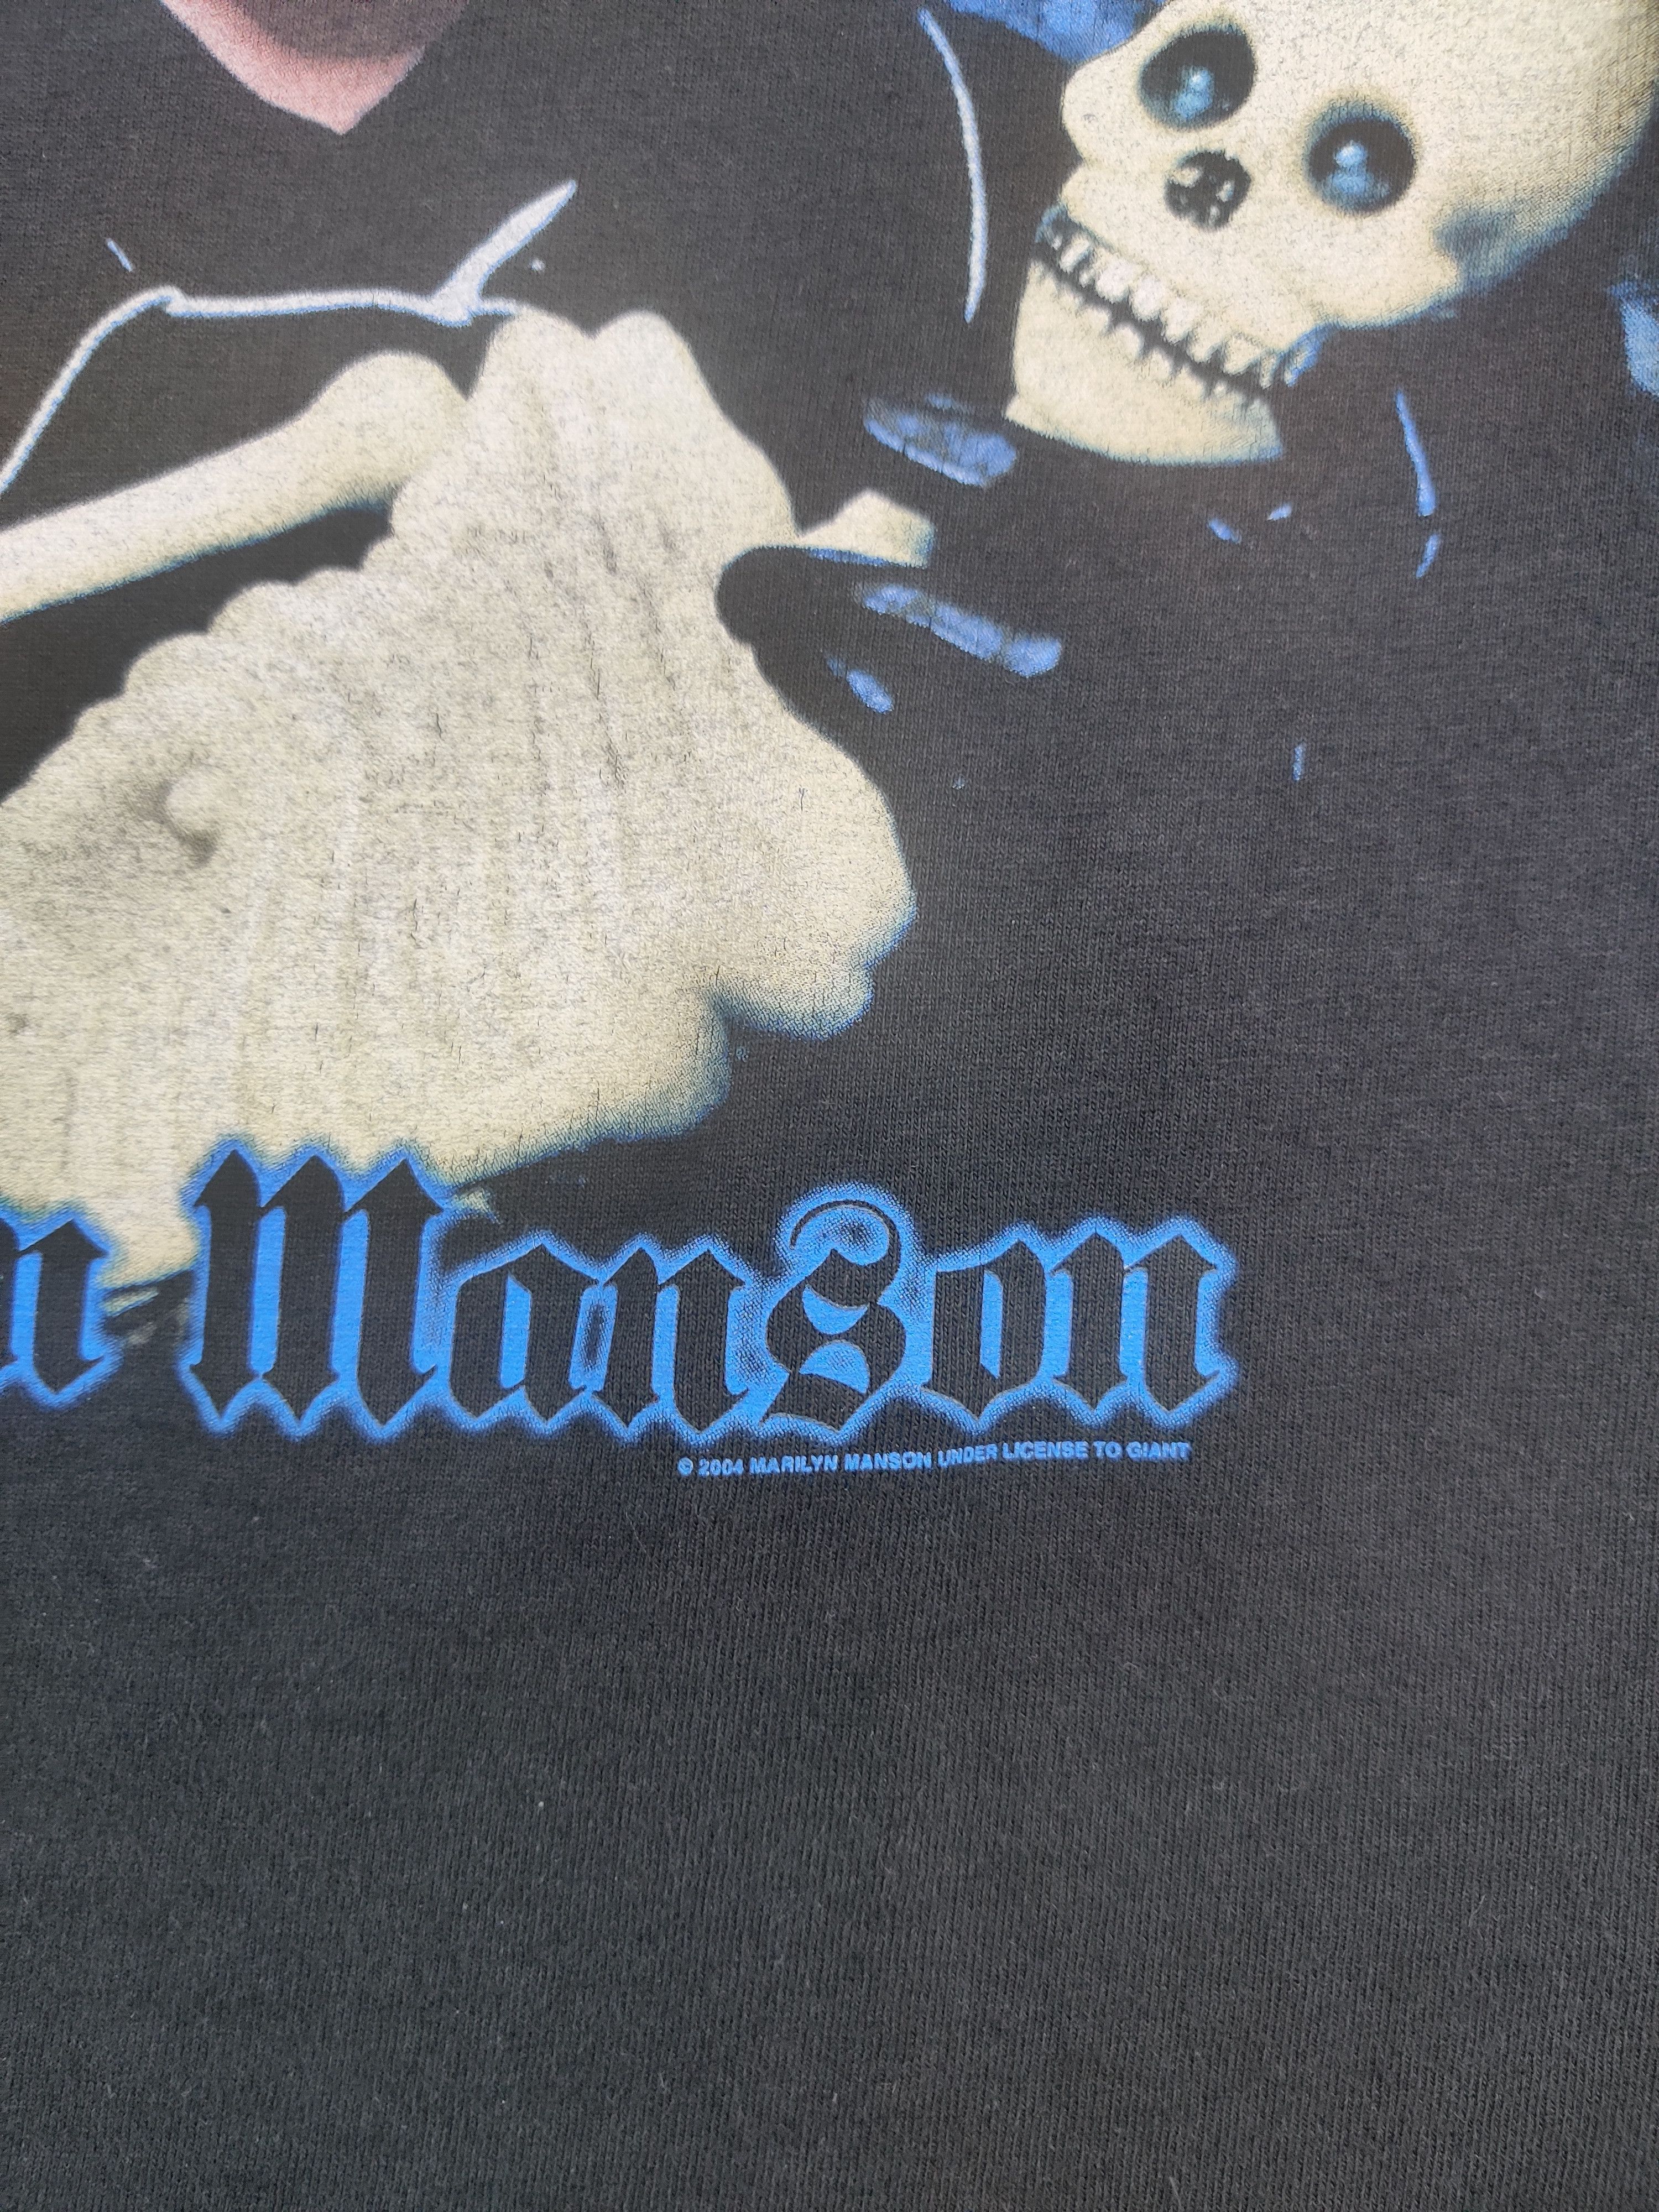 Vintage 2000 Vintage Marilyn Manson Band Tee Tshirt Size US M / EU 48-50 / 2 - 7 Thumbnail